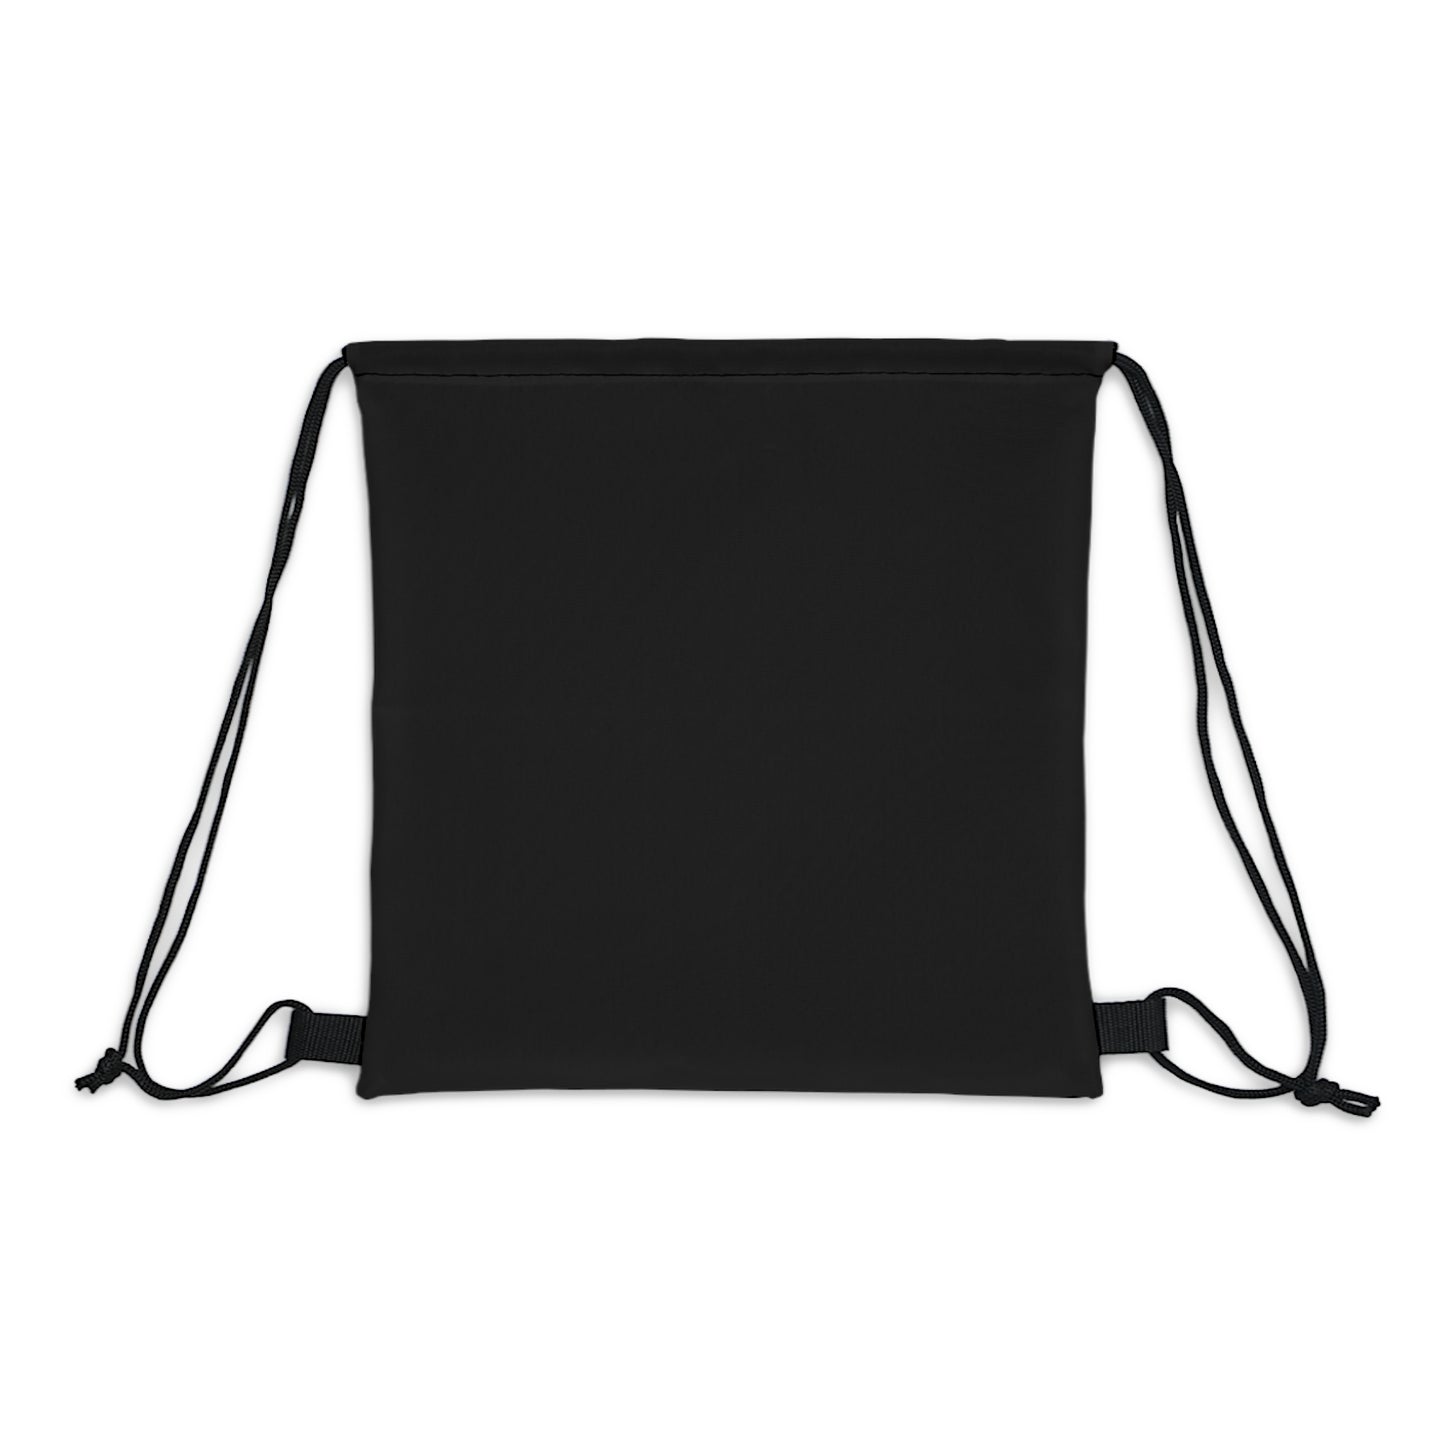 Pack 546 - Outdoor Drawstring Bag